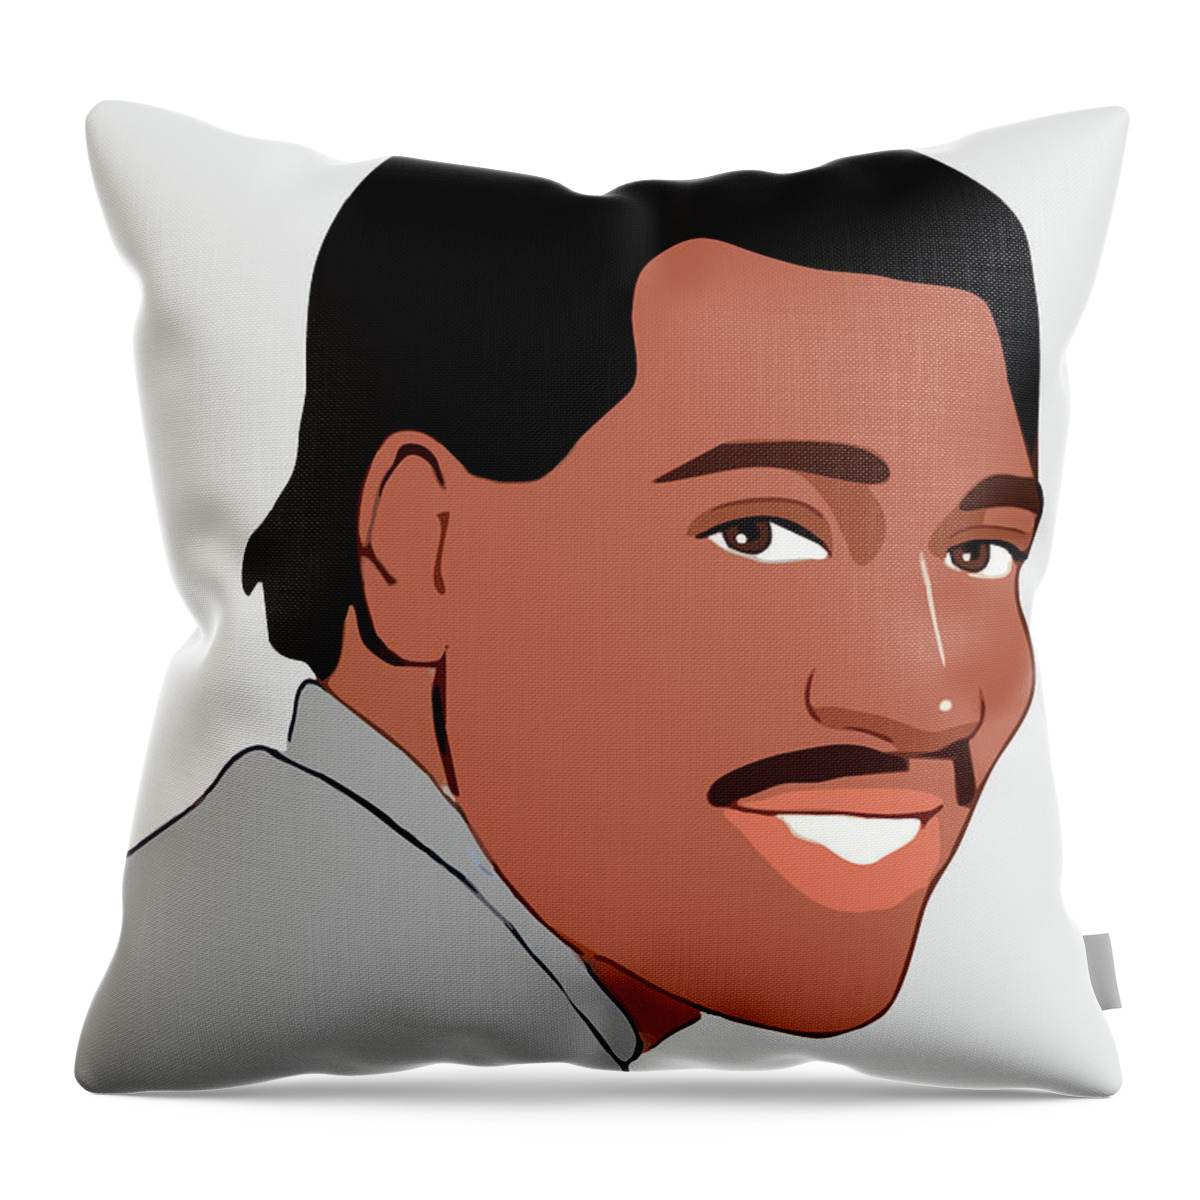 Otis Redding Throw Pillow featuring the digital art Otis Redding Cartoon Portrait 1 by Ahmad Nusyirwan